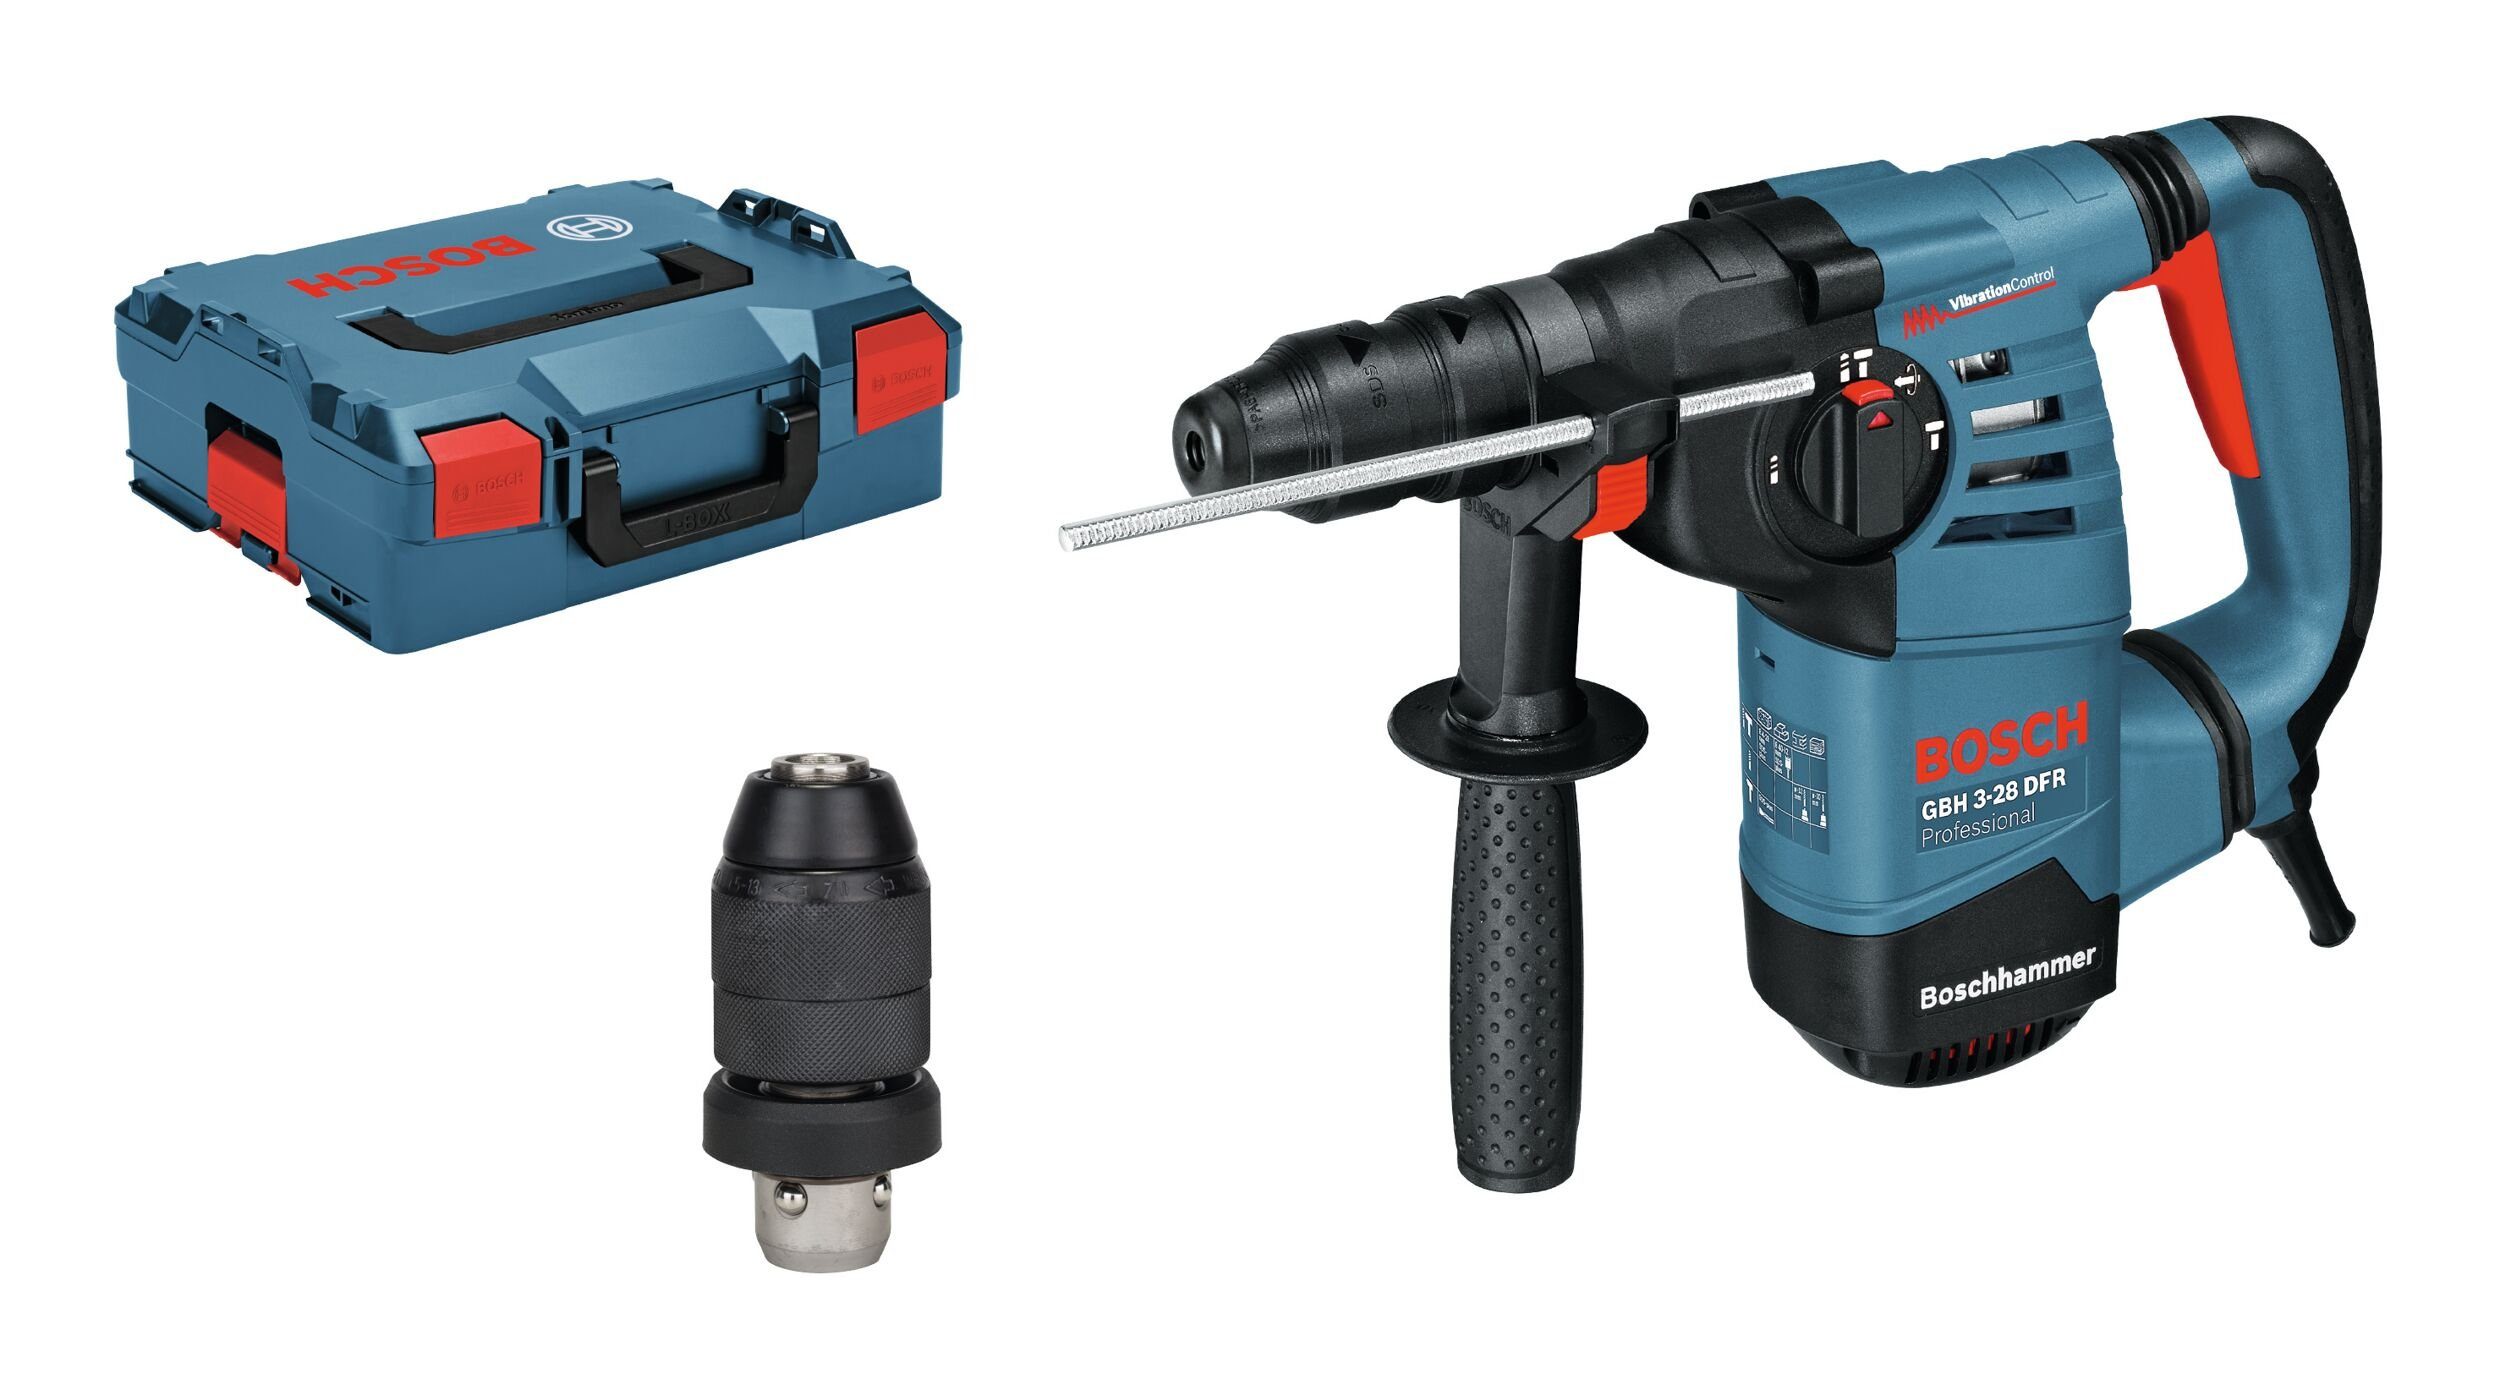 V, in Bohrhammer L-BOXX Bosch - 3-28 Professional GBH plus Mit SDS 230 DFR,